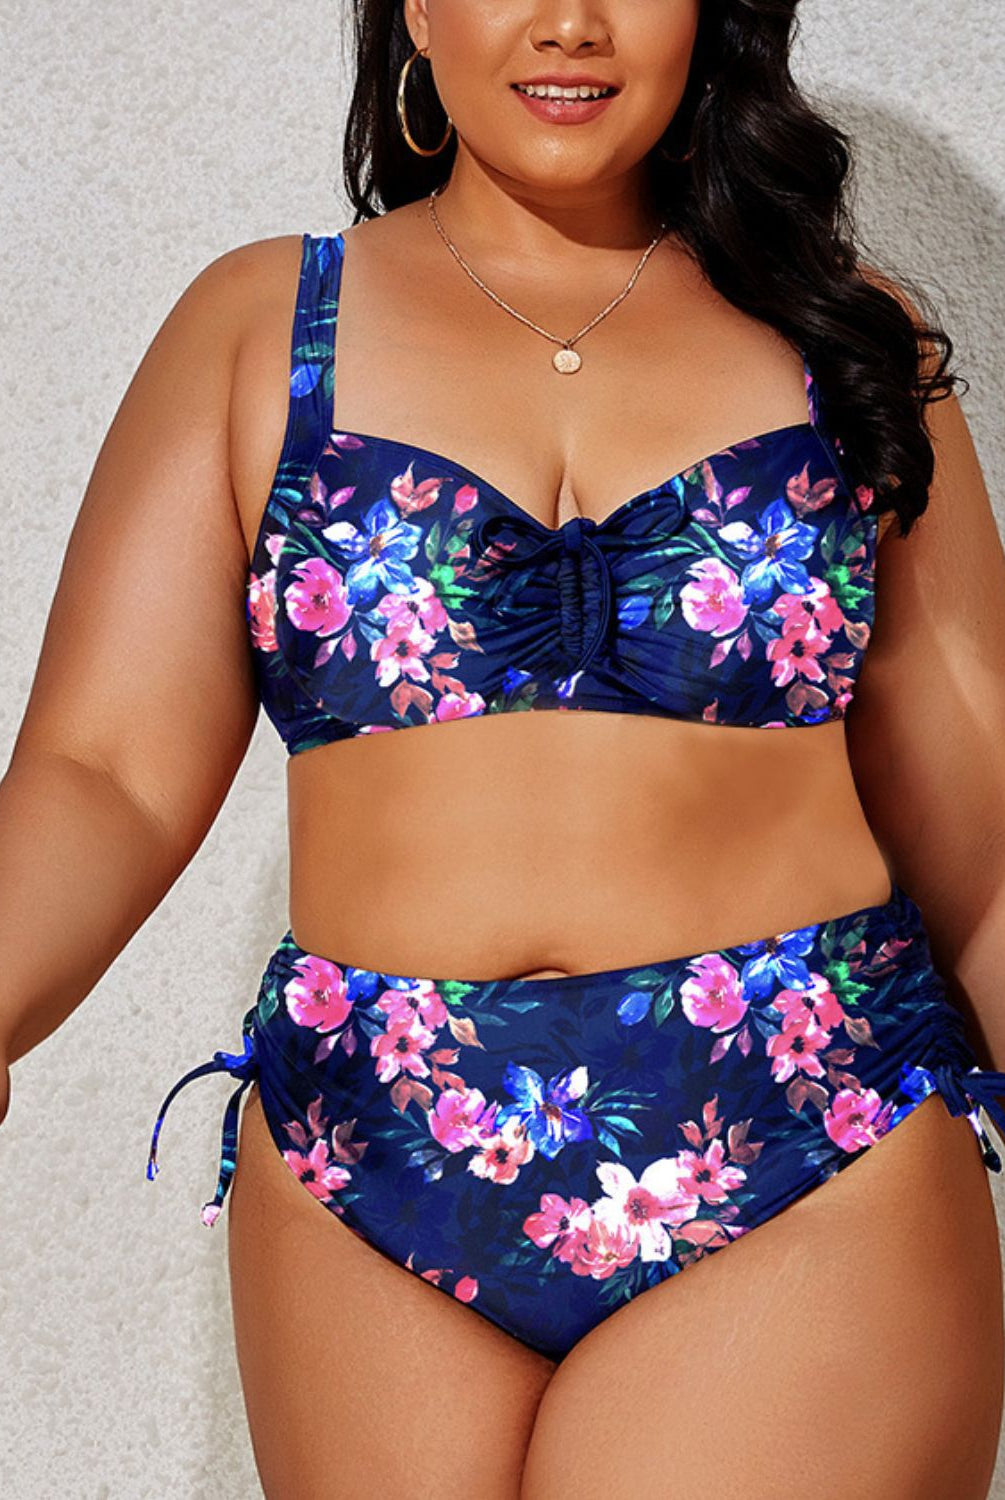 Rosy Brown Plus Size Printed Drawstring Detail Bikini Set Clothes